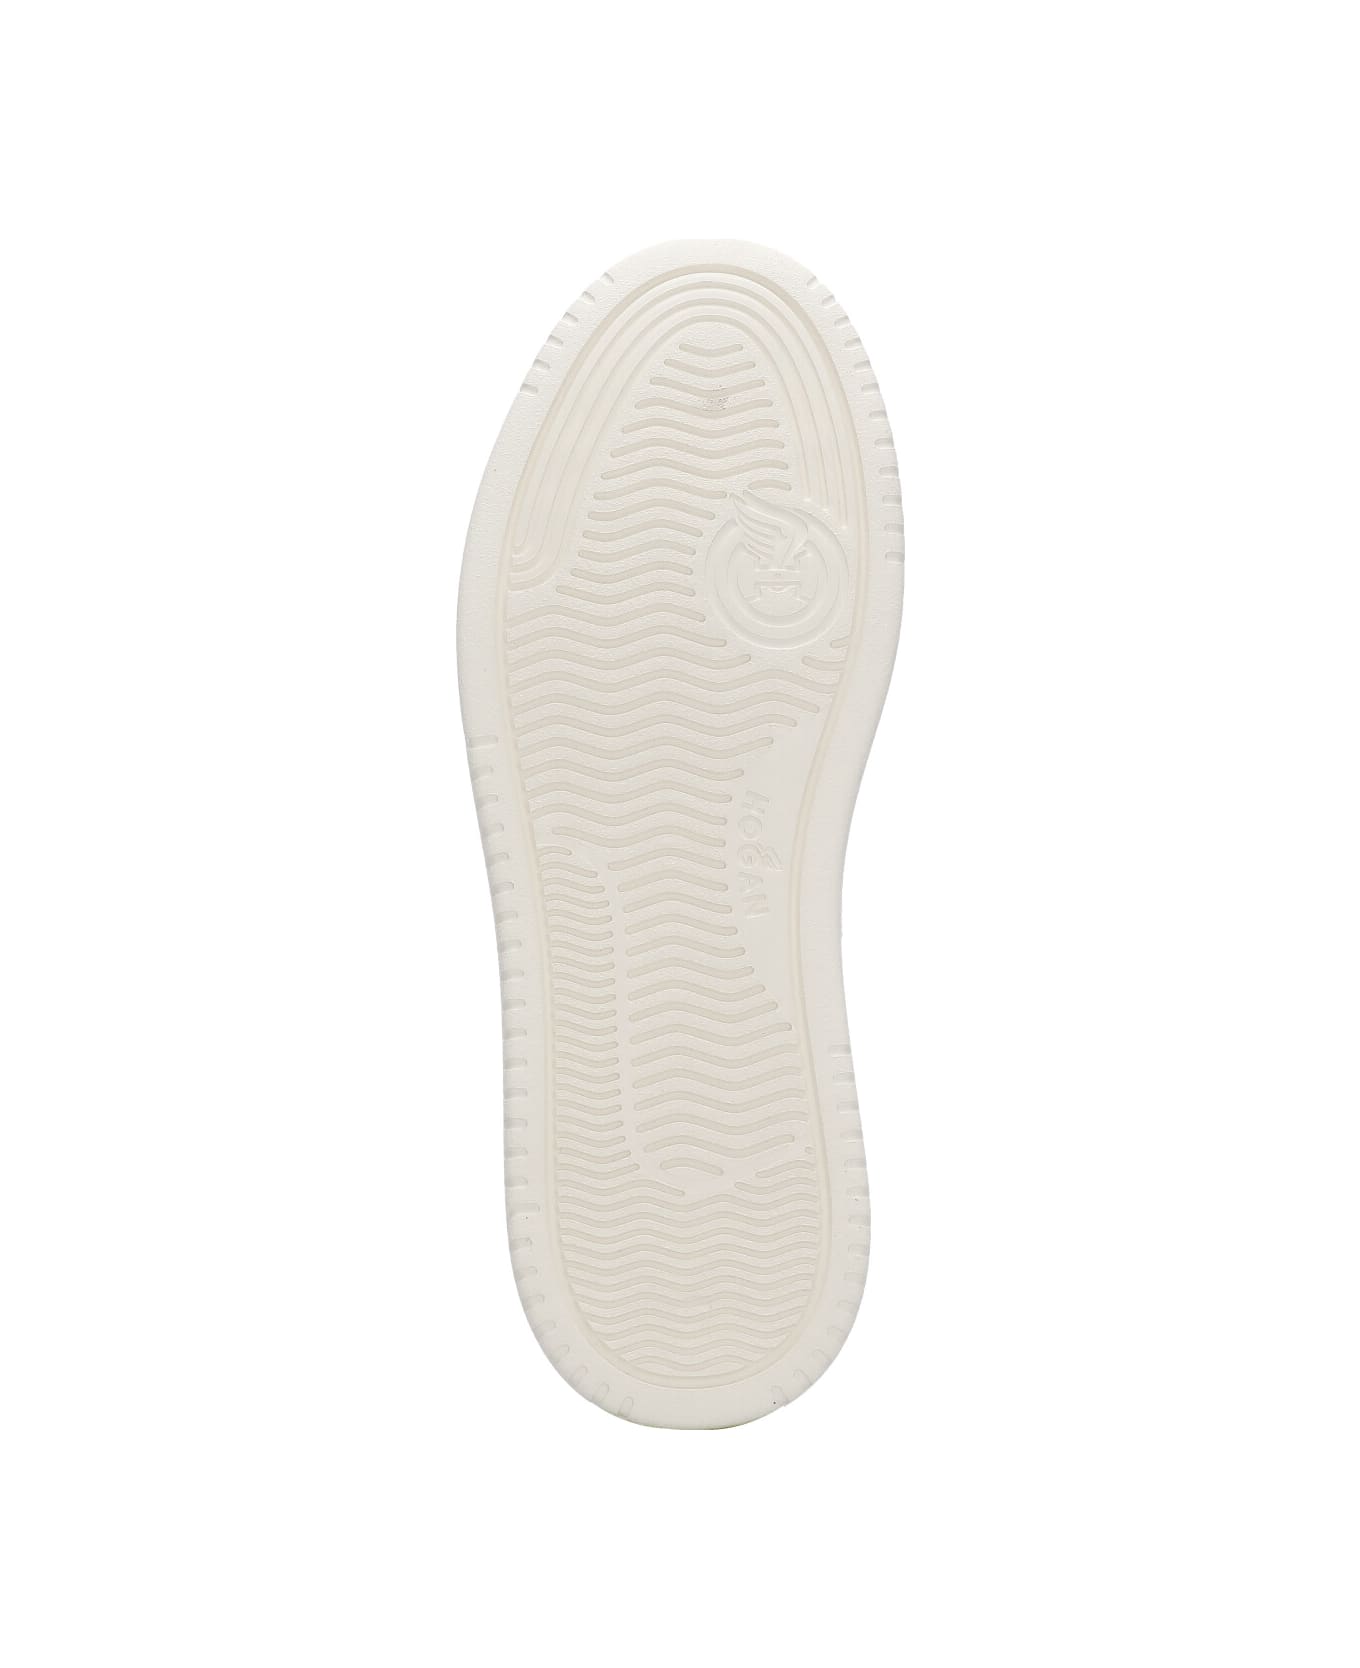 Hogan H630 Sneakers - White/beige スニーカー